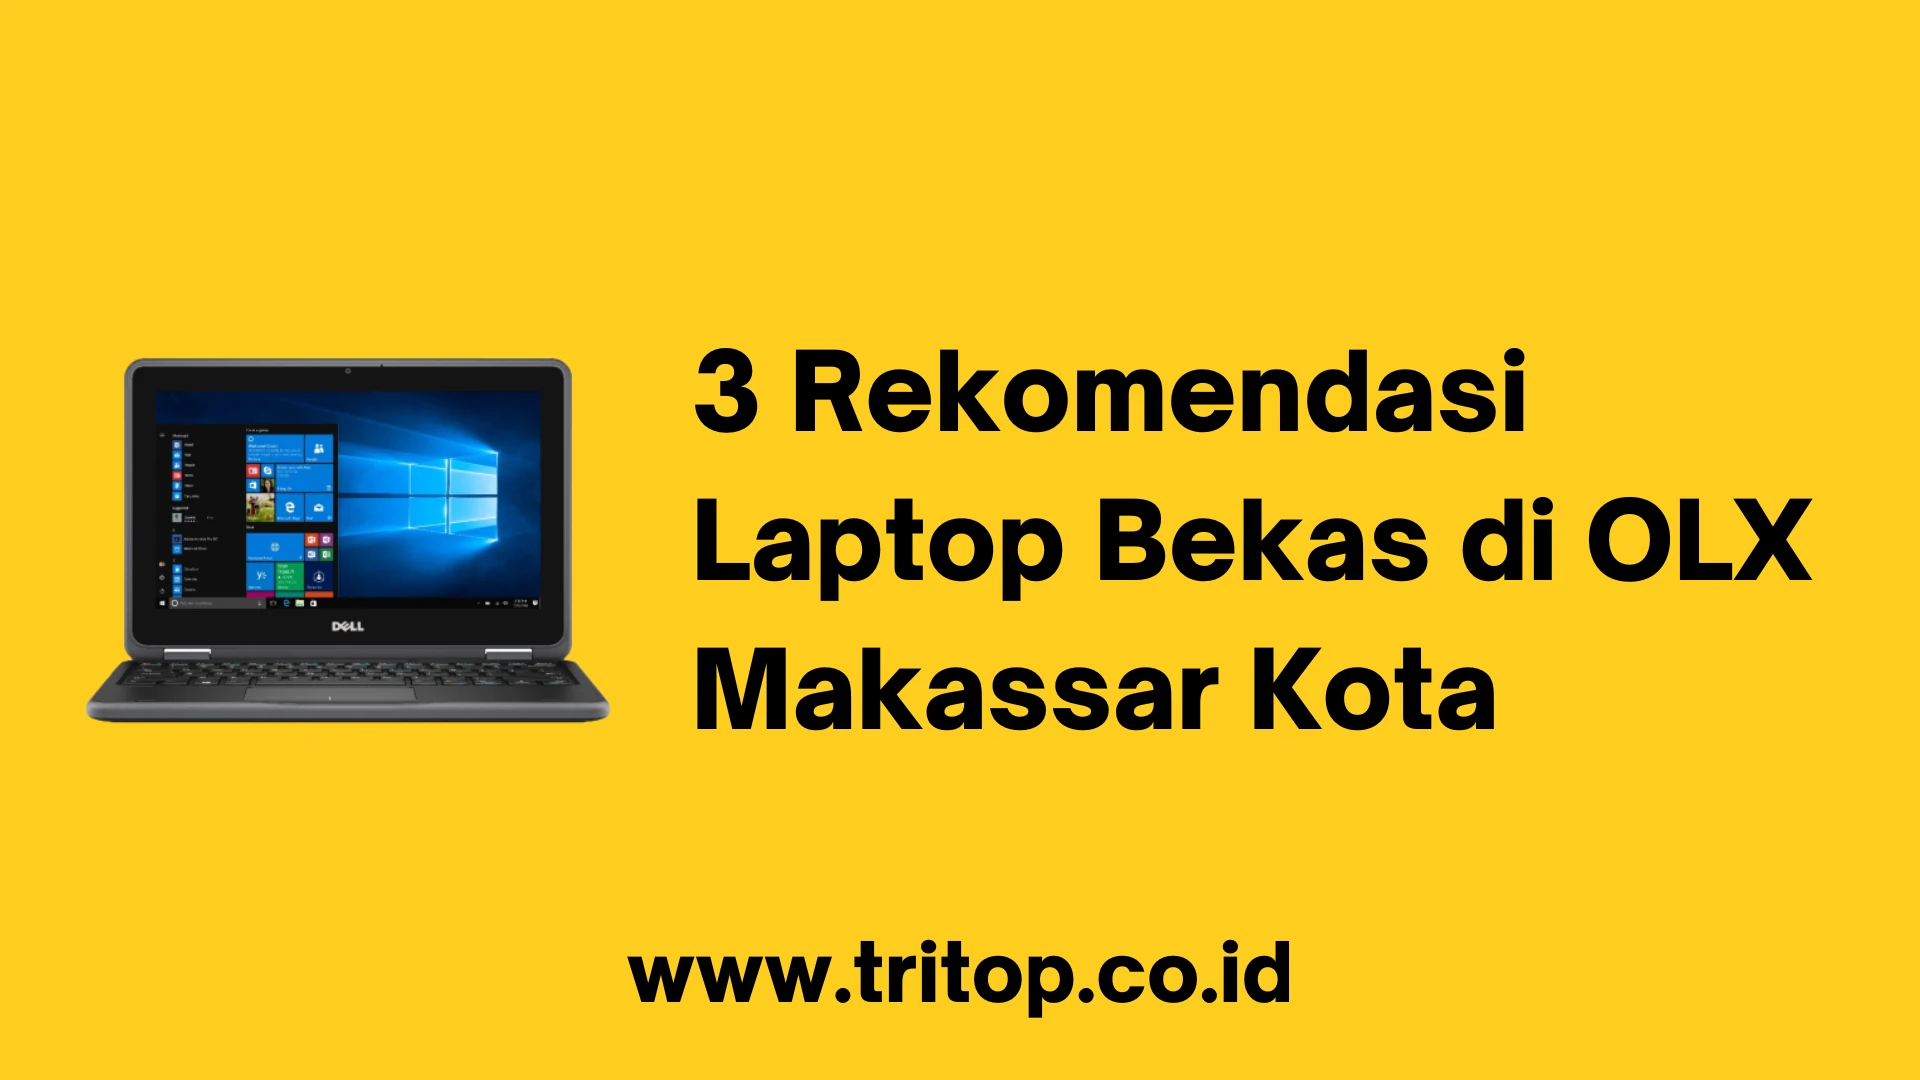 OLX Laptop Bekas Makassar Kota